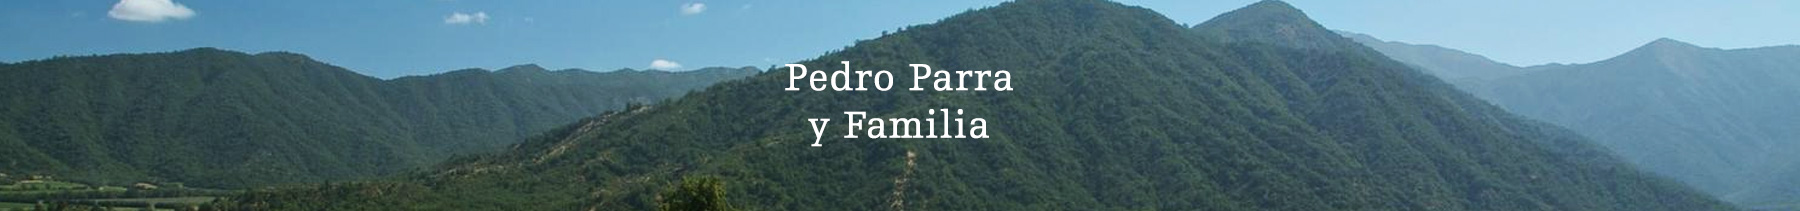 Pedro Parra y Familia